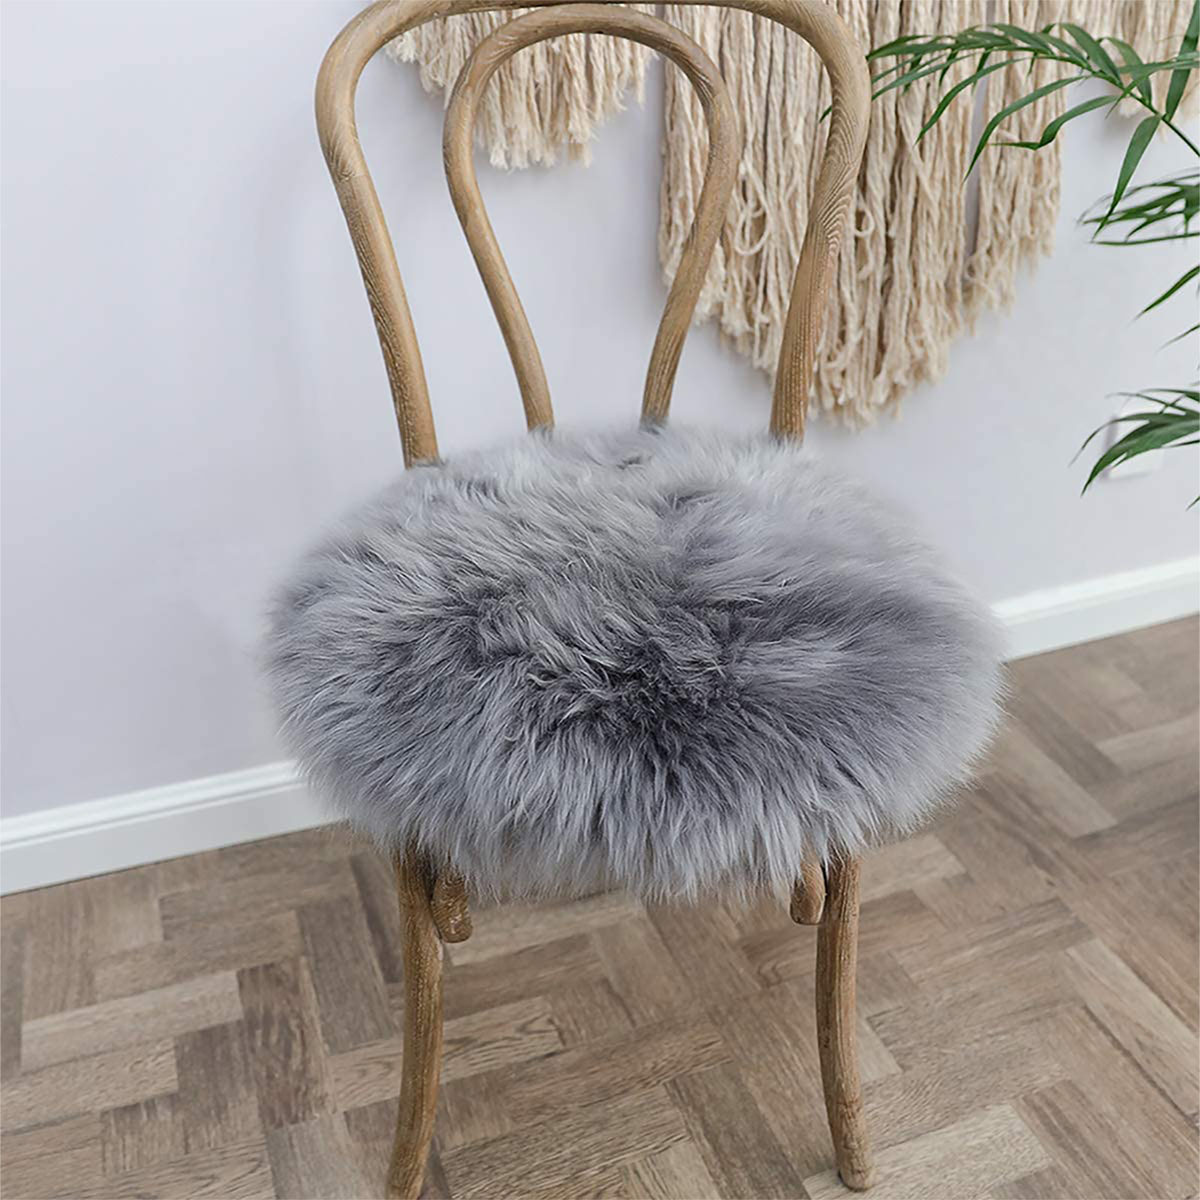 Shinnwa Grey Round Dorm Fur Chair Cushion Pad with Furry Faux Fur Cover  Small Mini Cute Seat Cushion for Kids Desk Chair Teen Girls Bedroom Décor  16